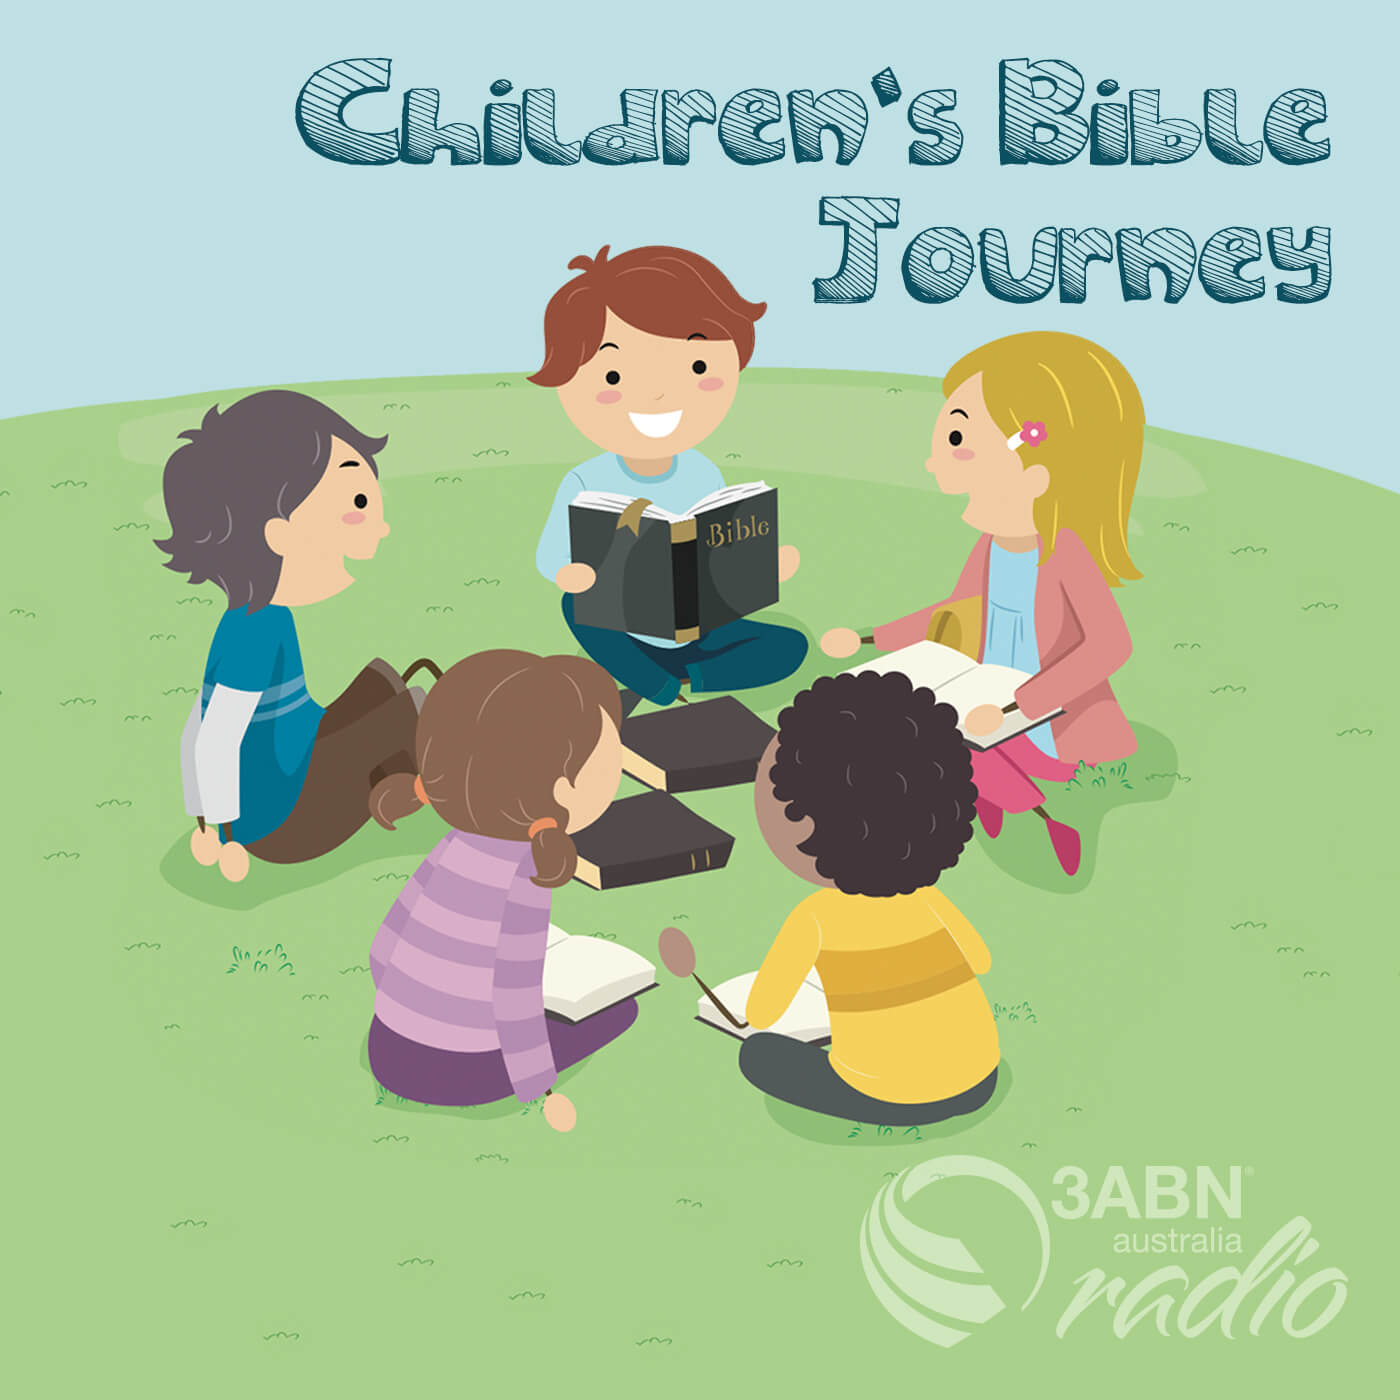 Children's Bible Journey - 2216